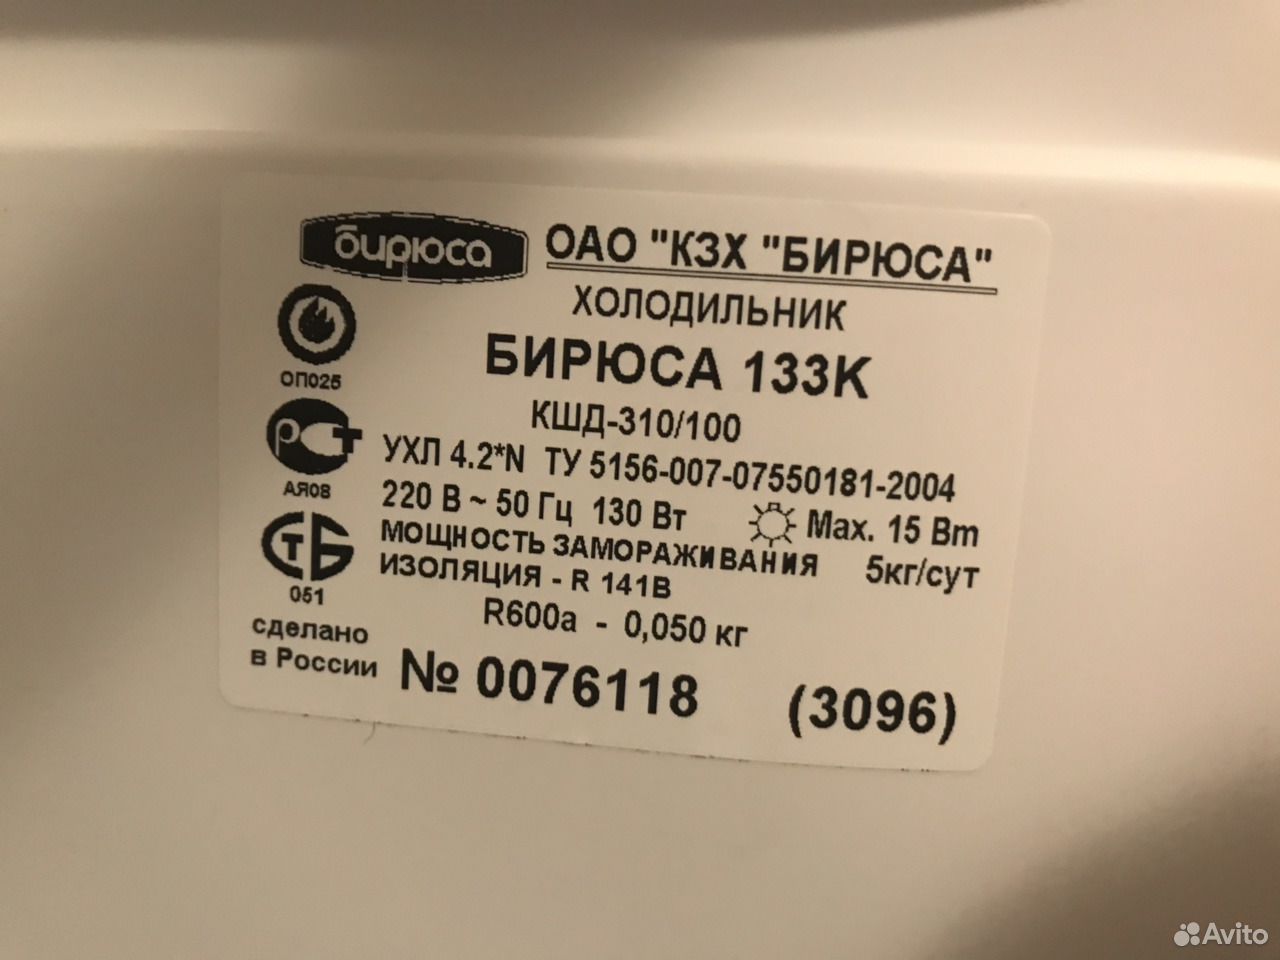 Холодильный шкаф r1400v ариада норма заправки фреона